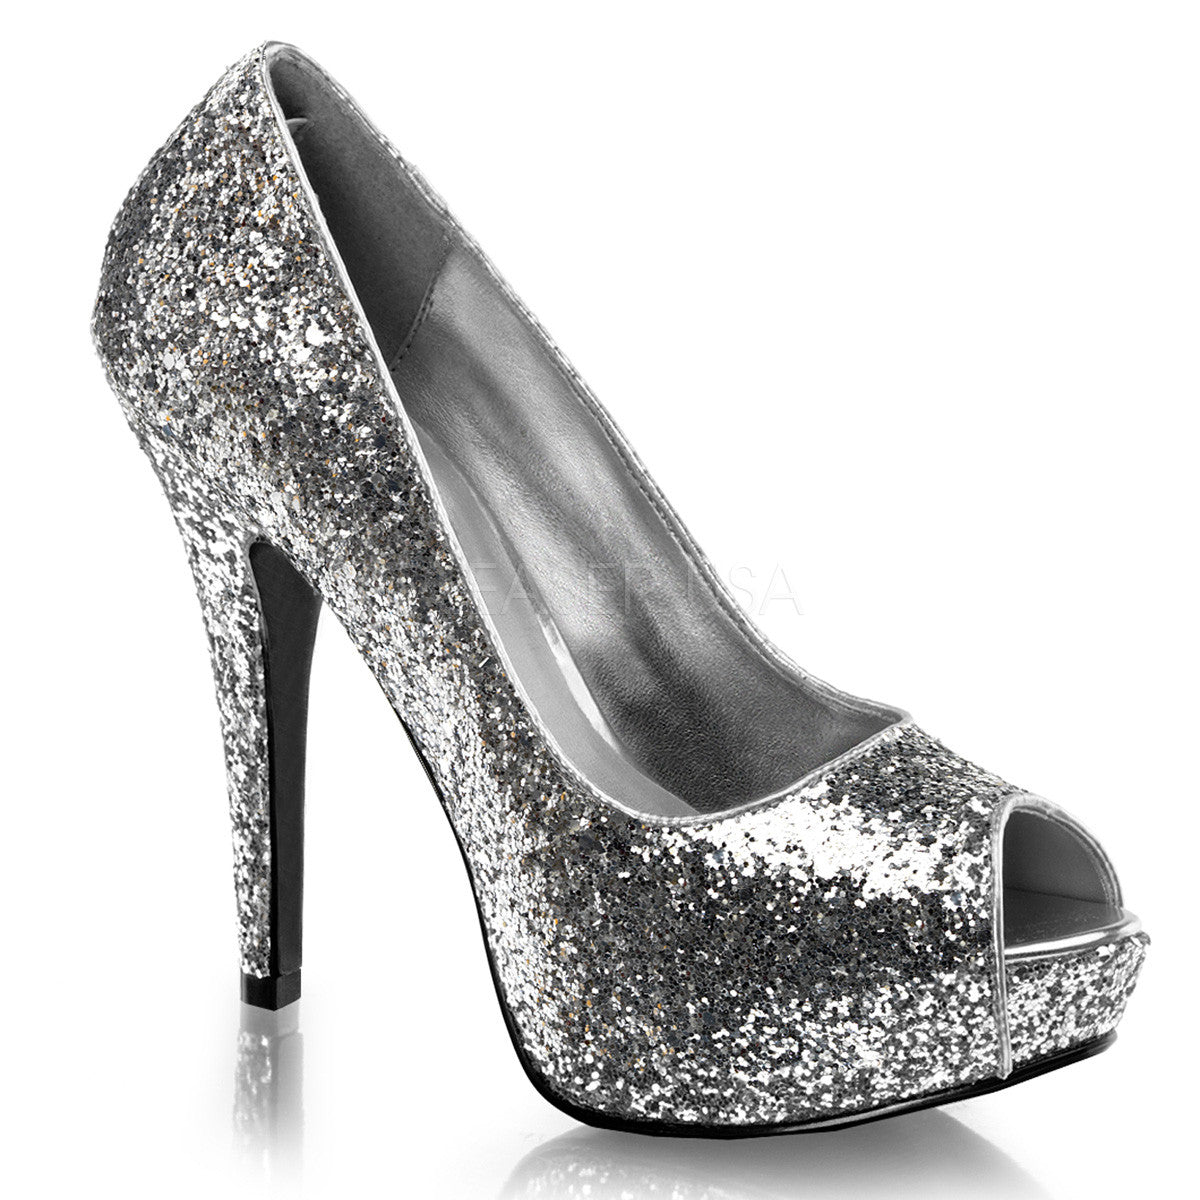 FABULICIOUS TWINKLE-18G Silver Glitter Peep Toe Pumps - Shoecup.com